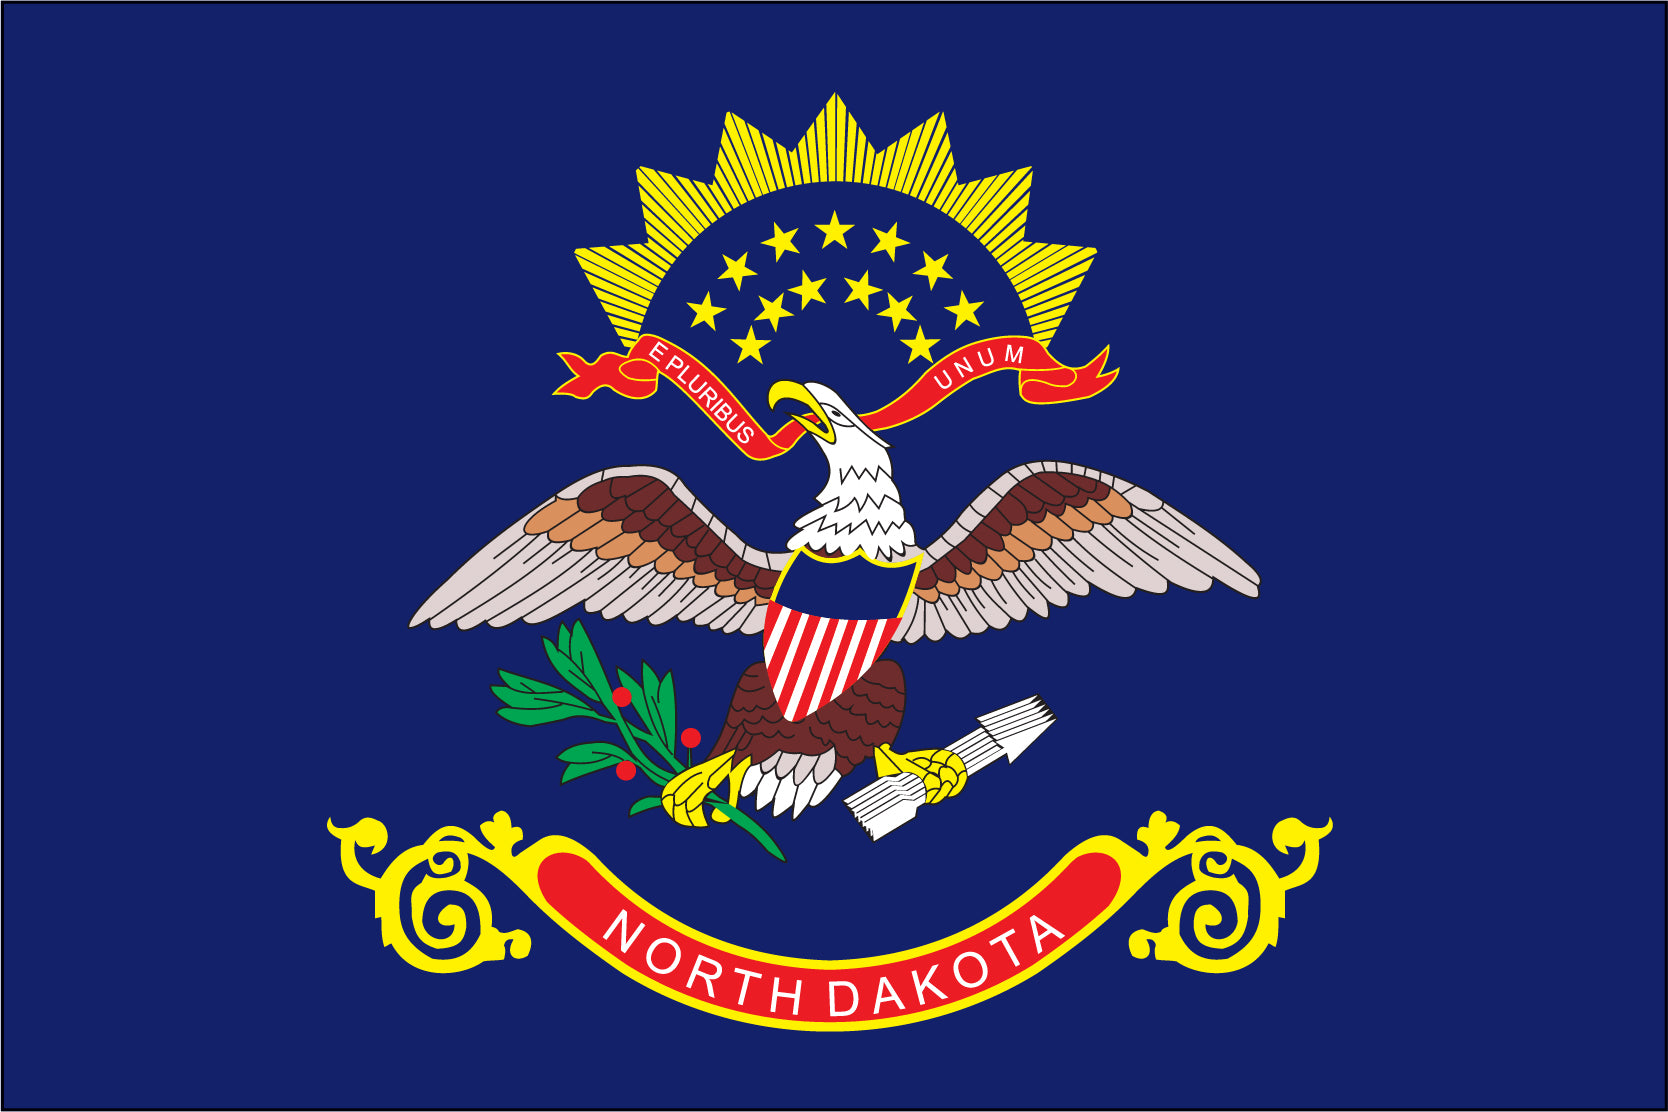 north dakota state flag, flag of north dakota